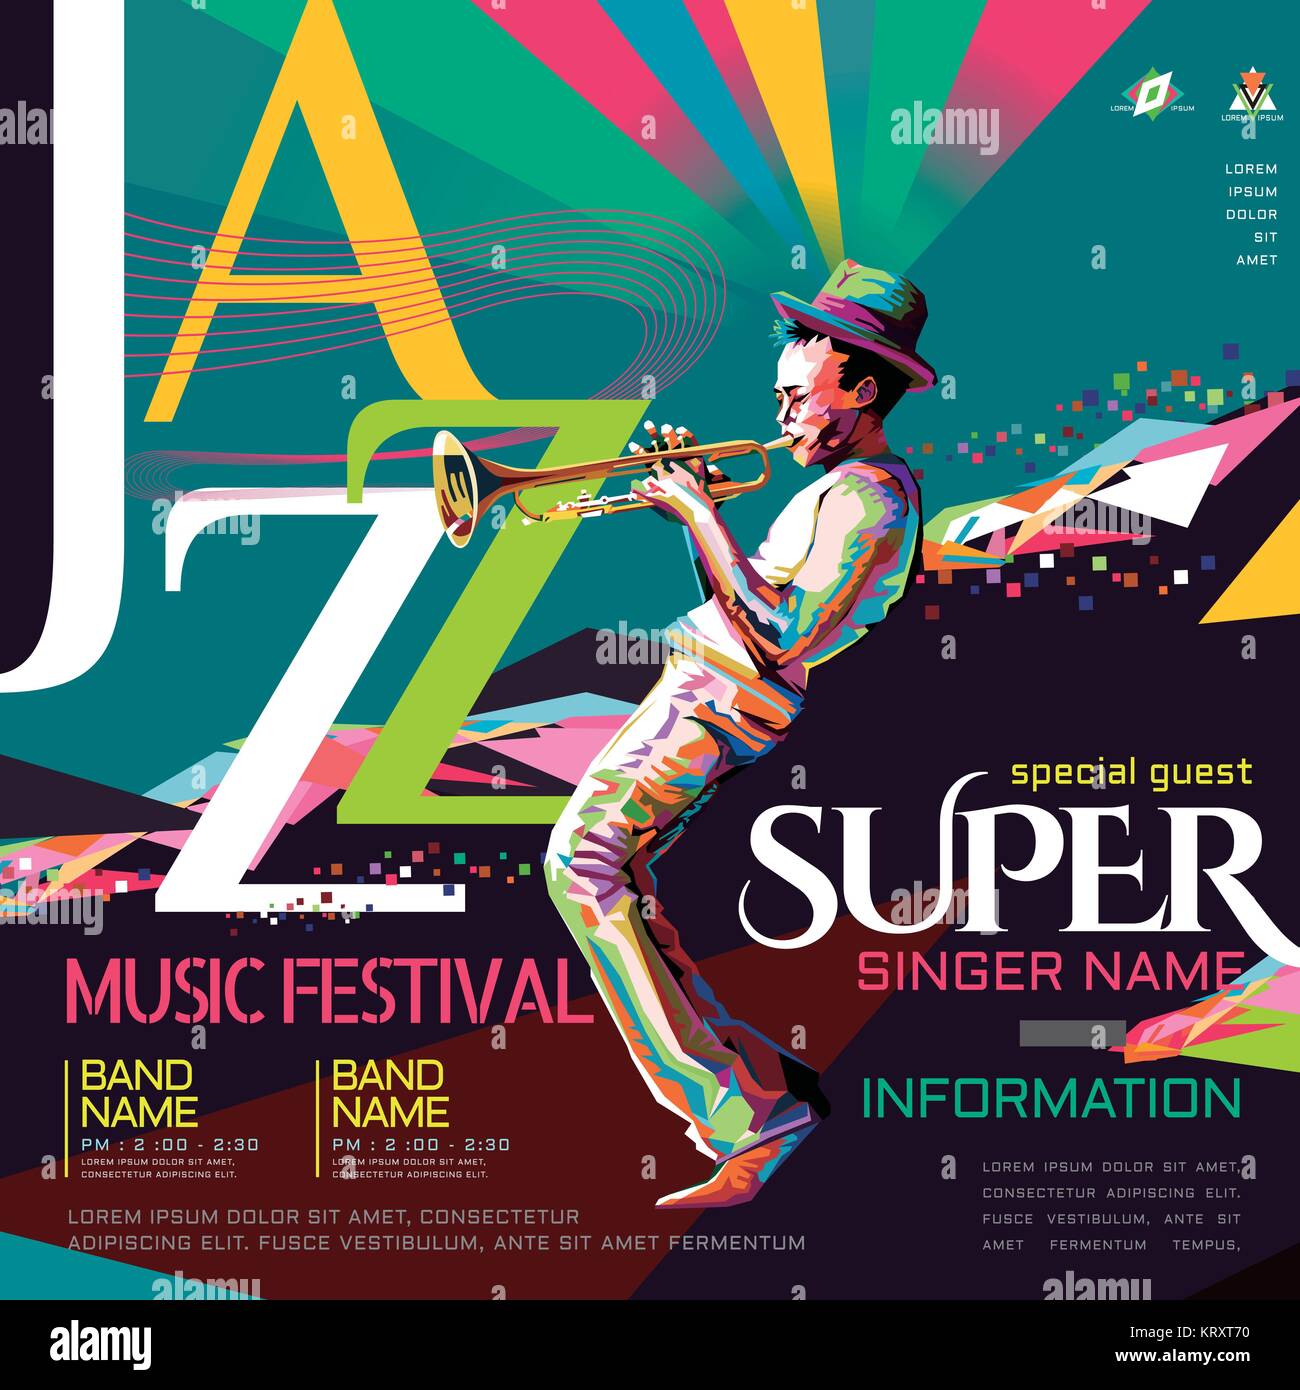 Jazz all night poster, music festival design in WPAP style, pop art portrait for trumpet performance Stock Vector